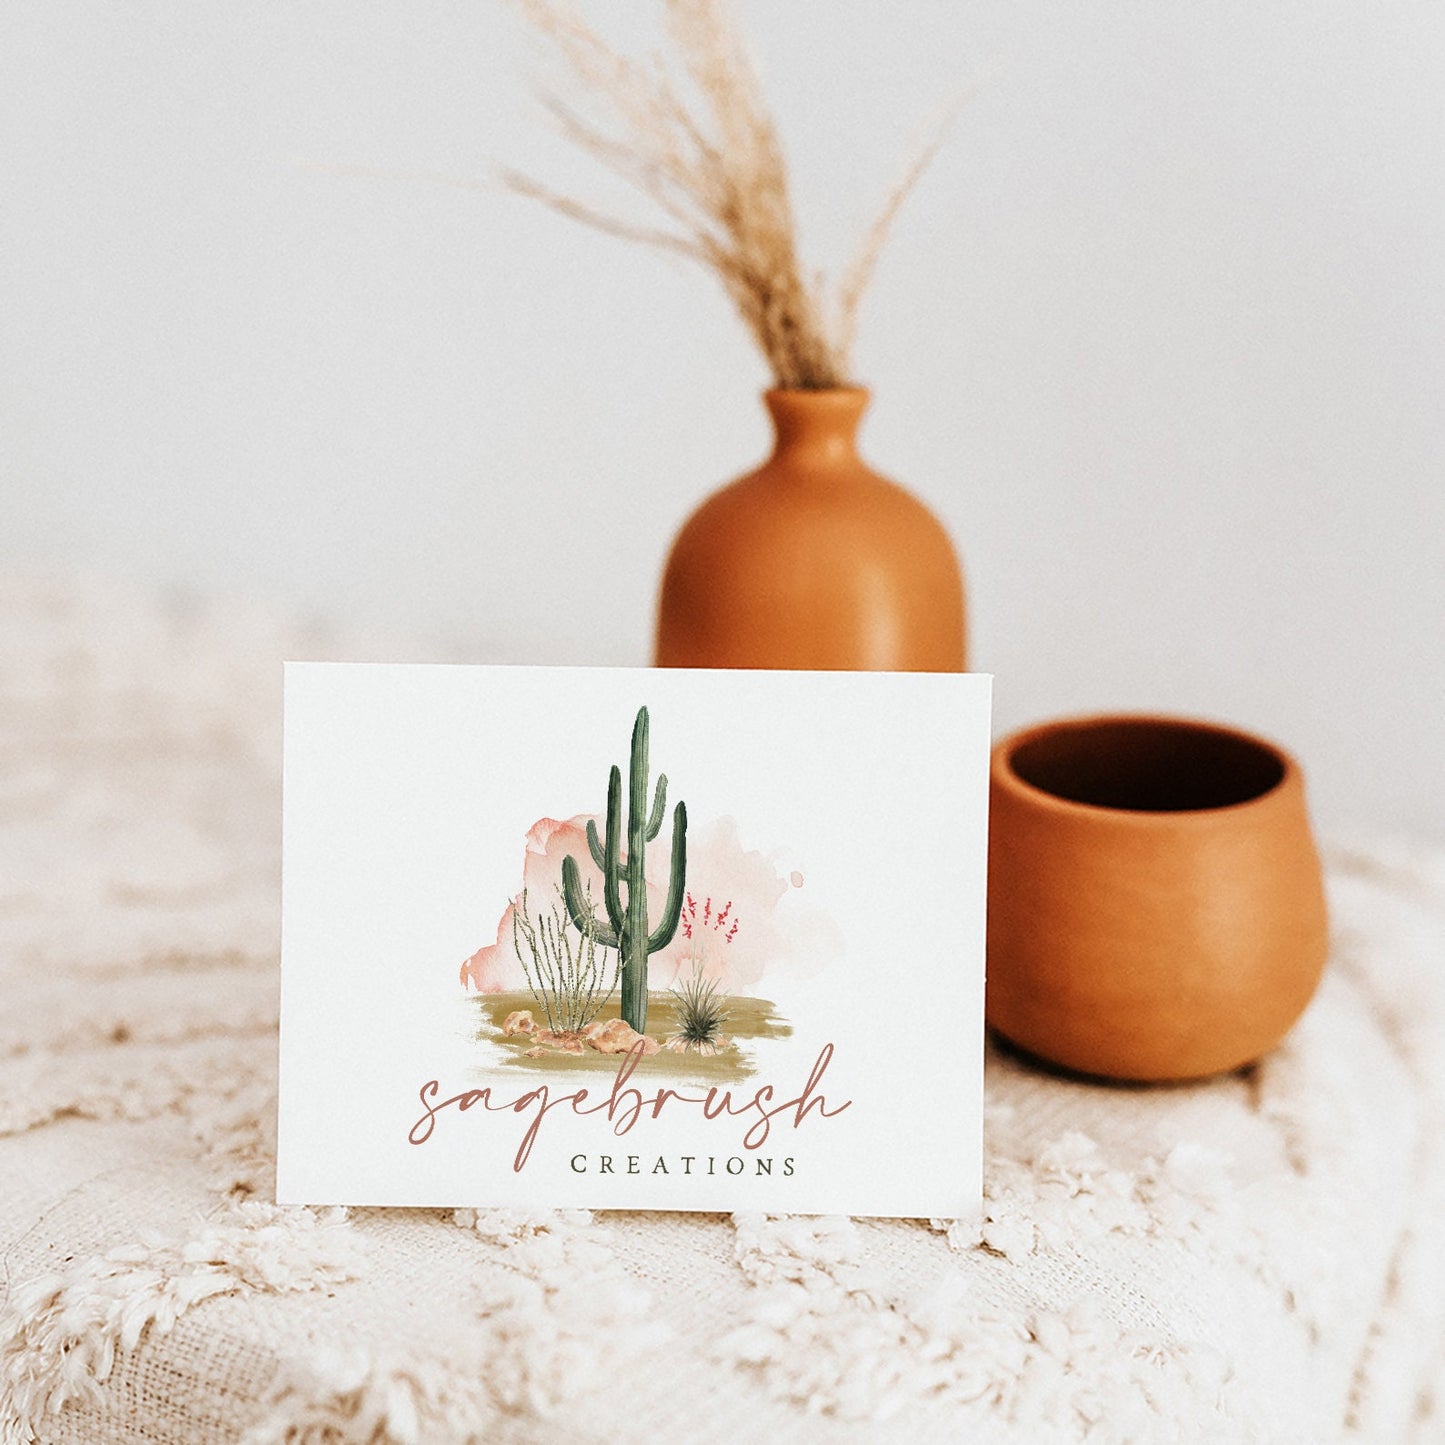 Sagebrush Creations | Premade Logo Design | Cactus, Desert Plants, Boho, Western